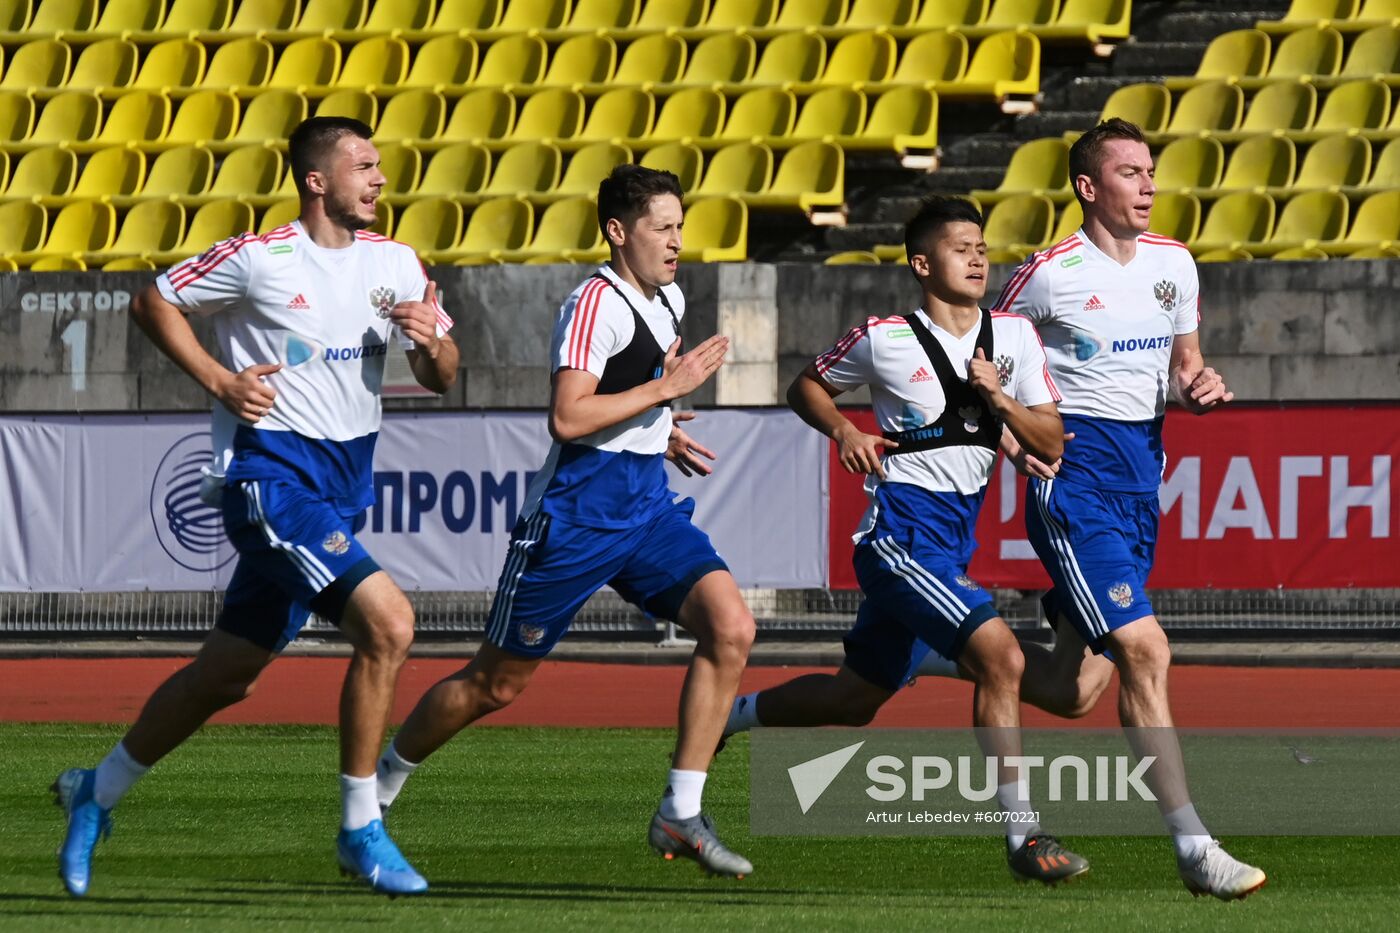 Russia Soccer Euro 2020 Training Session